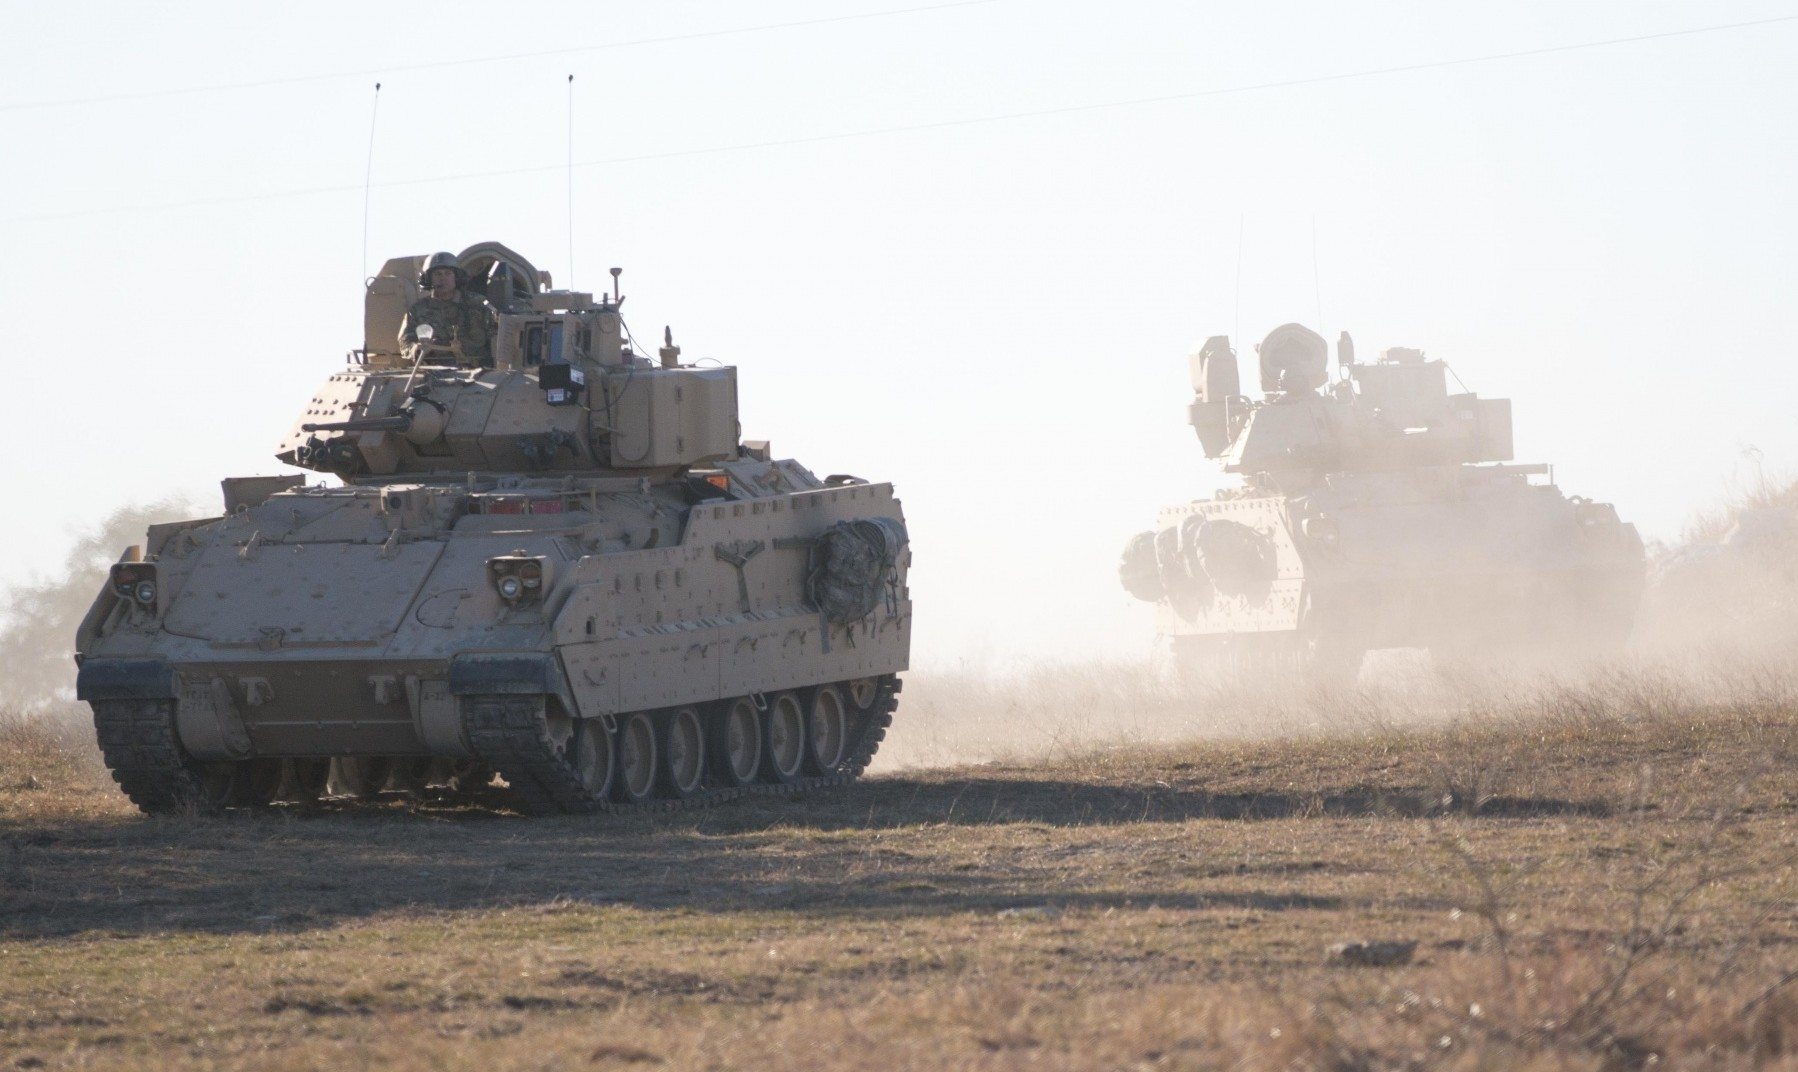 M2A3 Bradley Fighting Vehicle crews